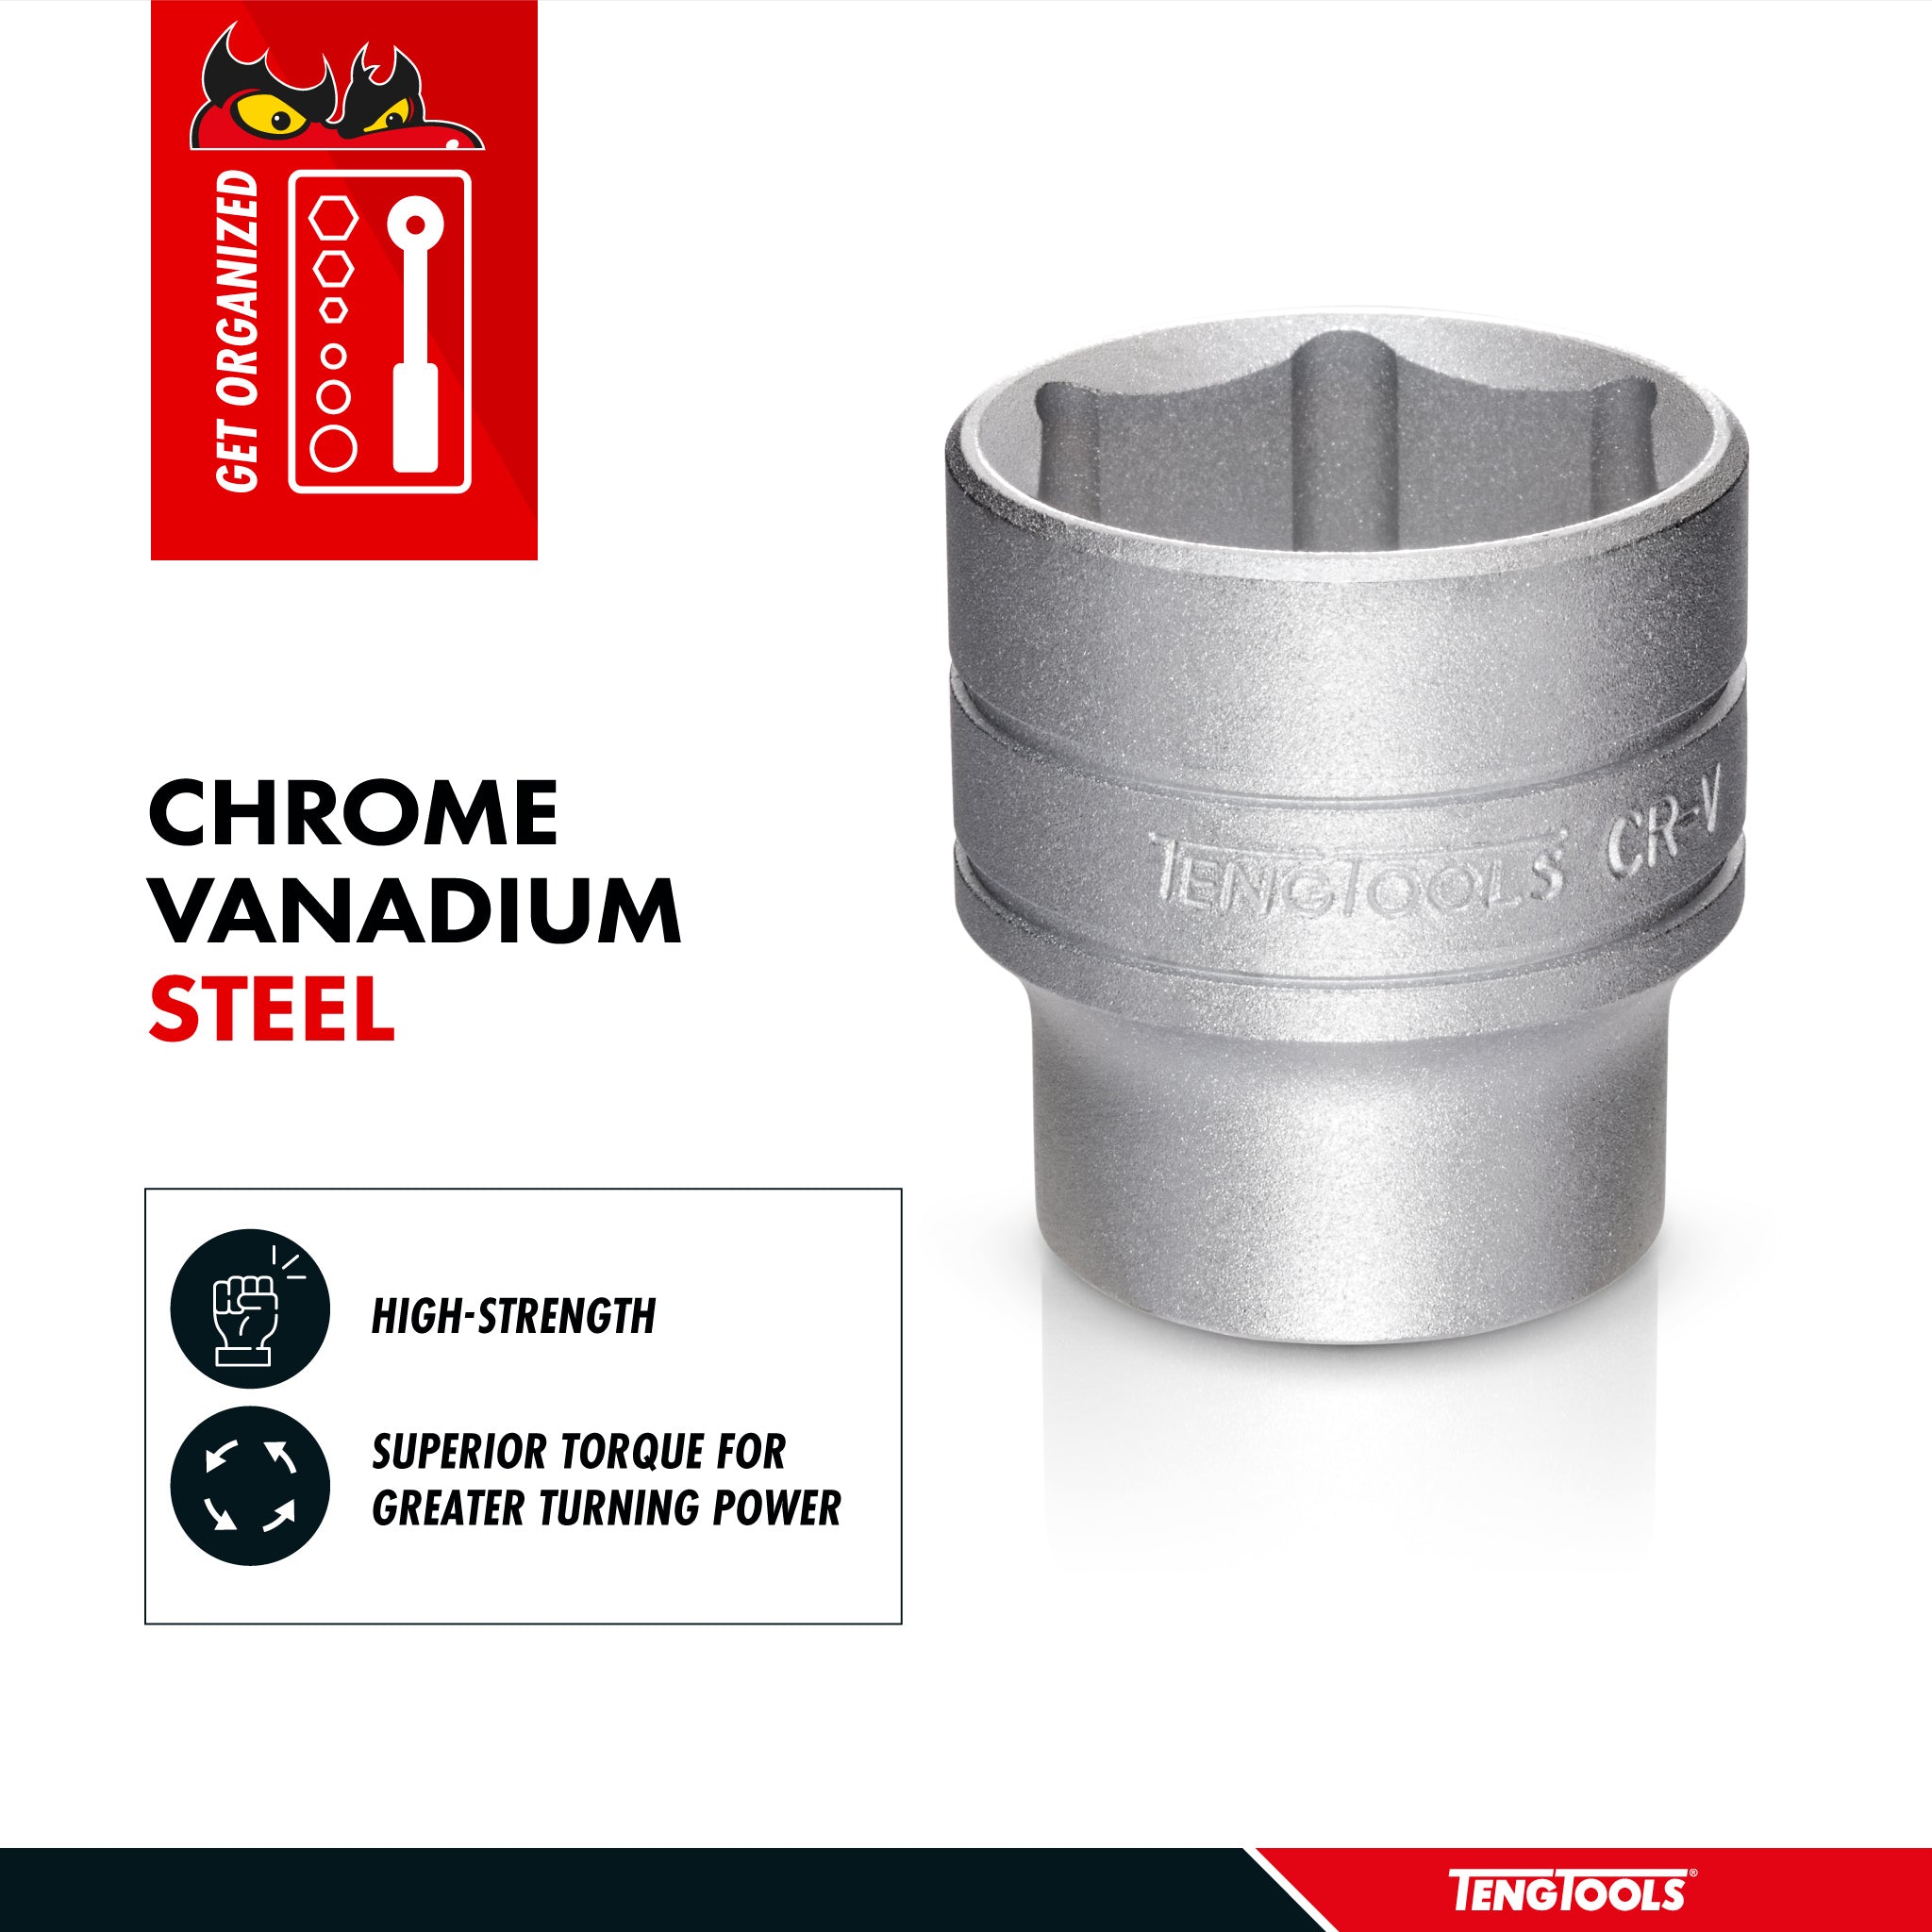 Teng Tools 6 Point SAE Shallow 3/8 Inch Drive Chrome Vanadium Sockets - 7/16